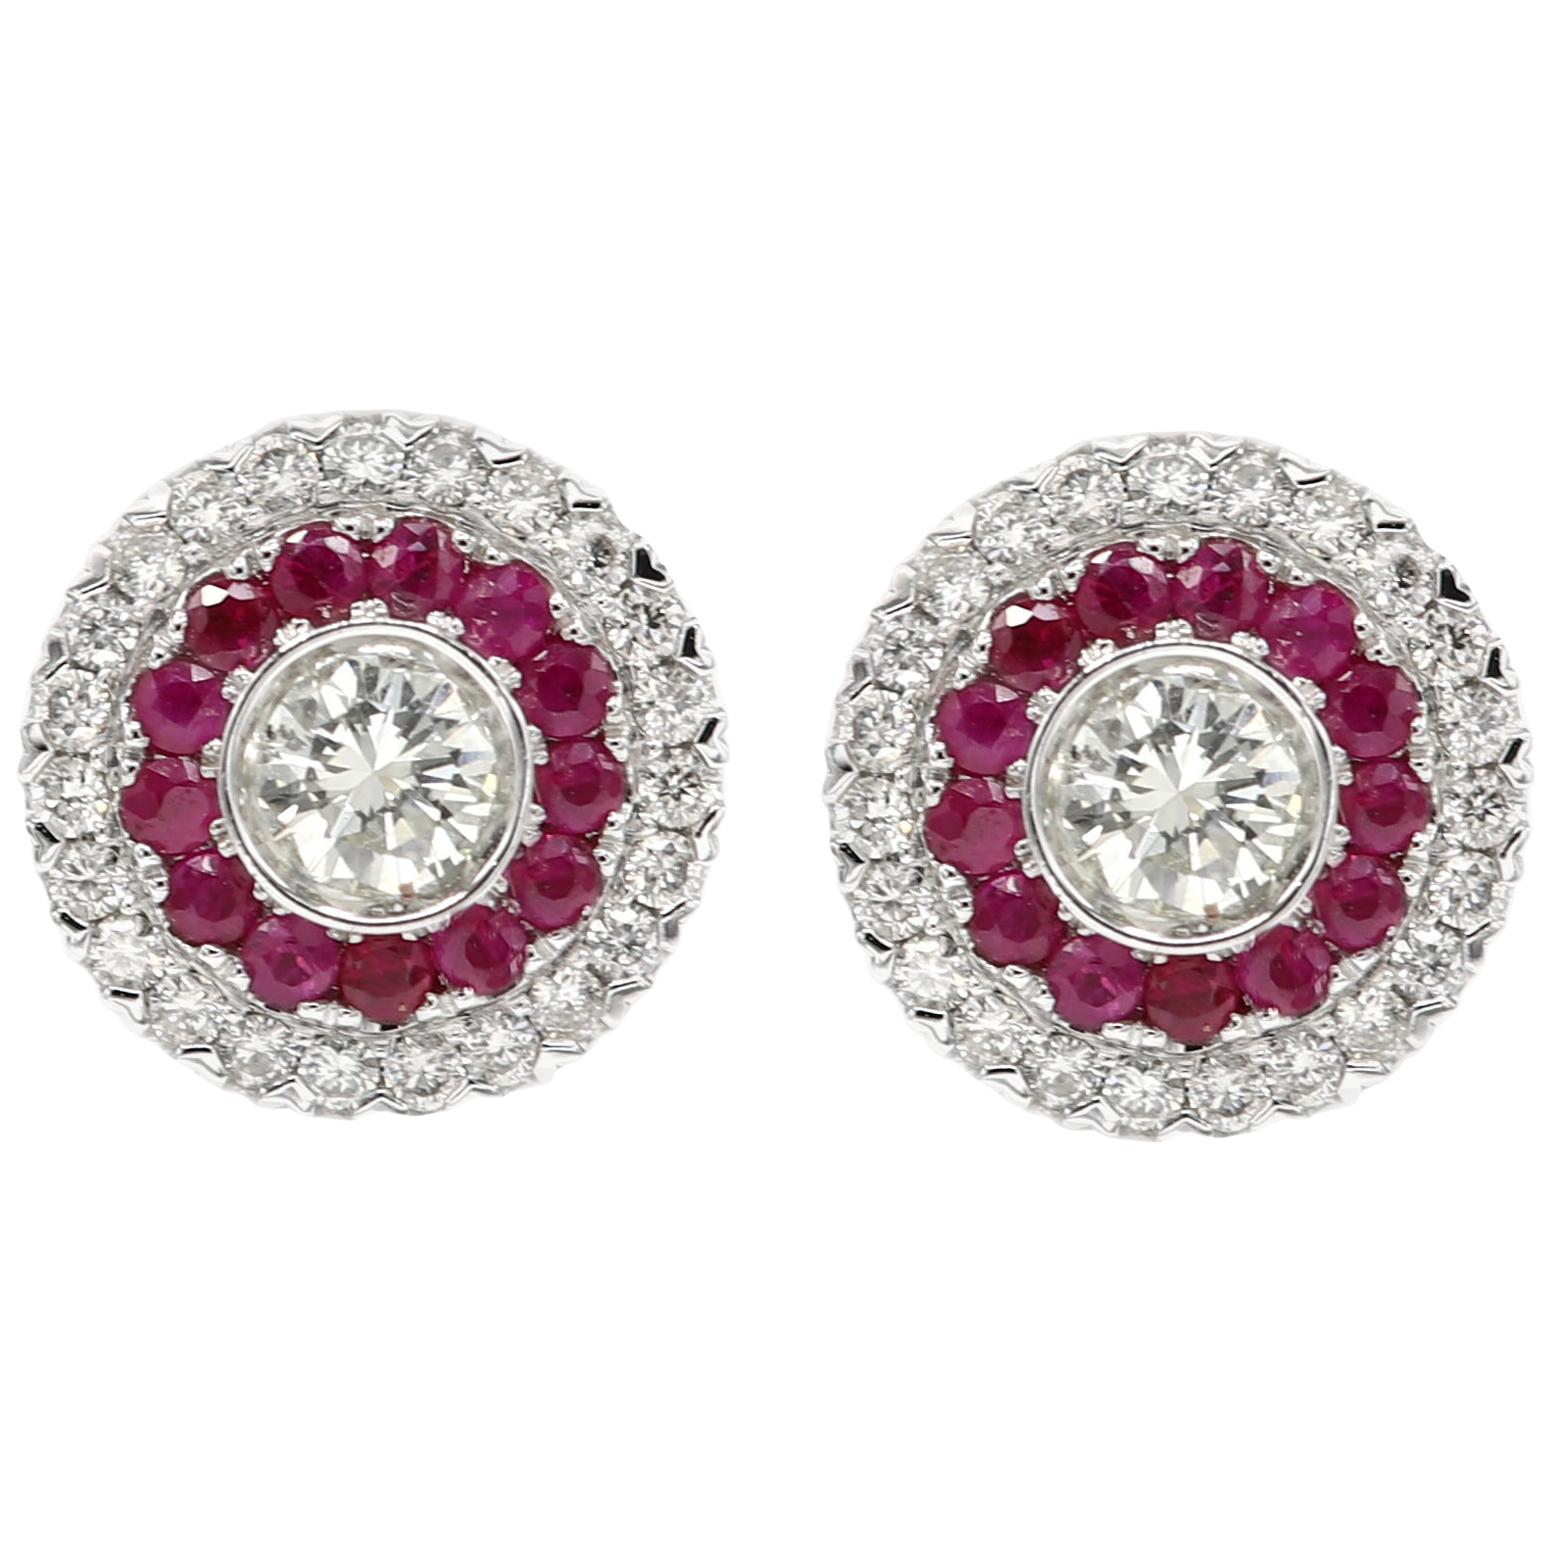 Art Deco Style Earring 18 Karat White Gold Diamonds & Ruby Earrings Large Studs